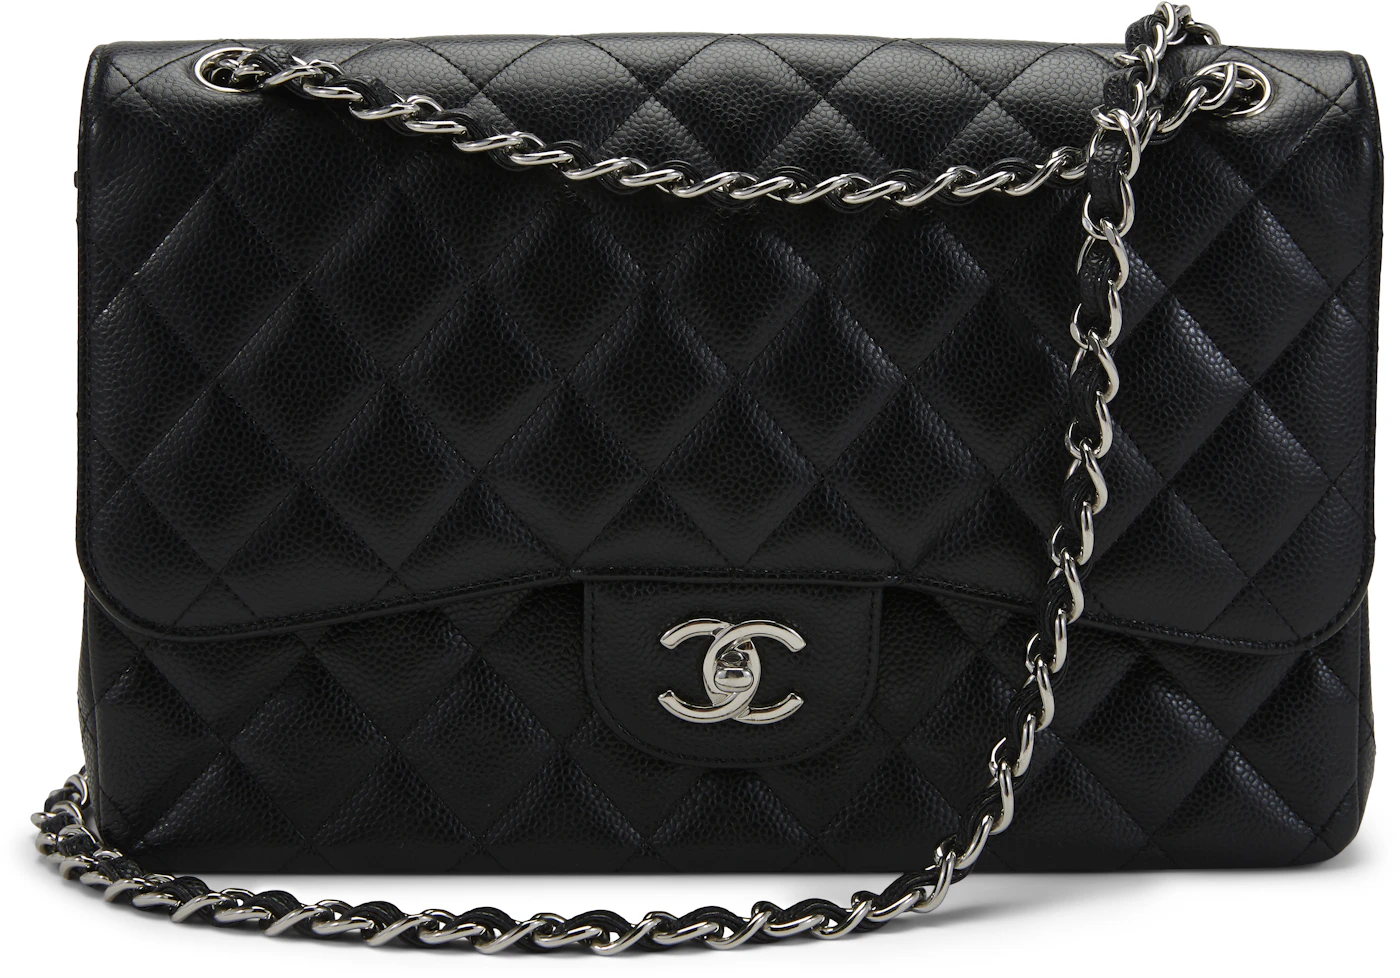 chanel small black leather purse handbag